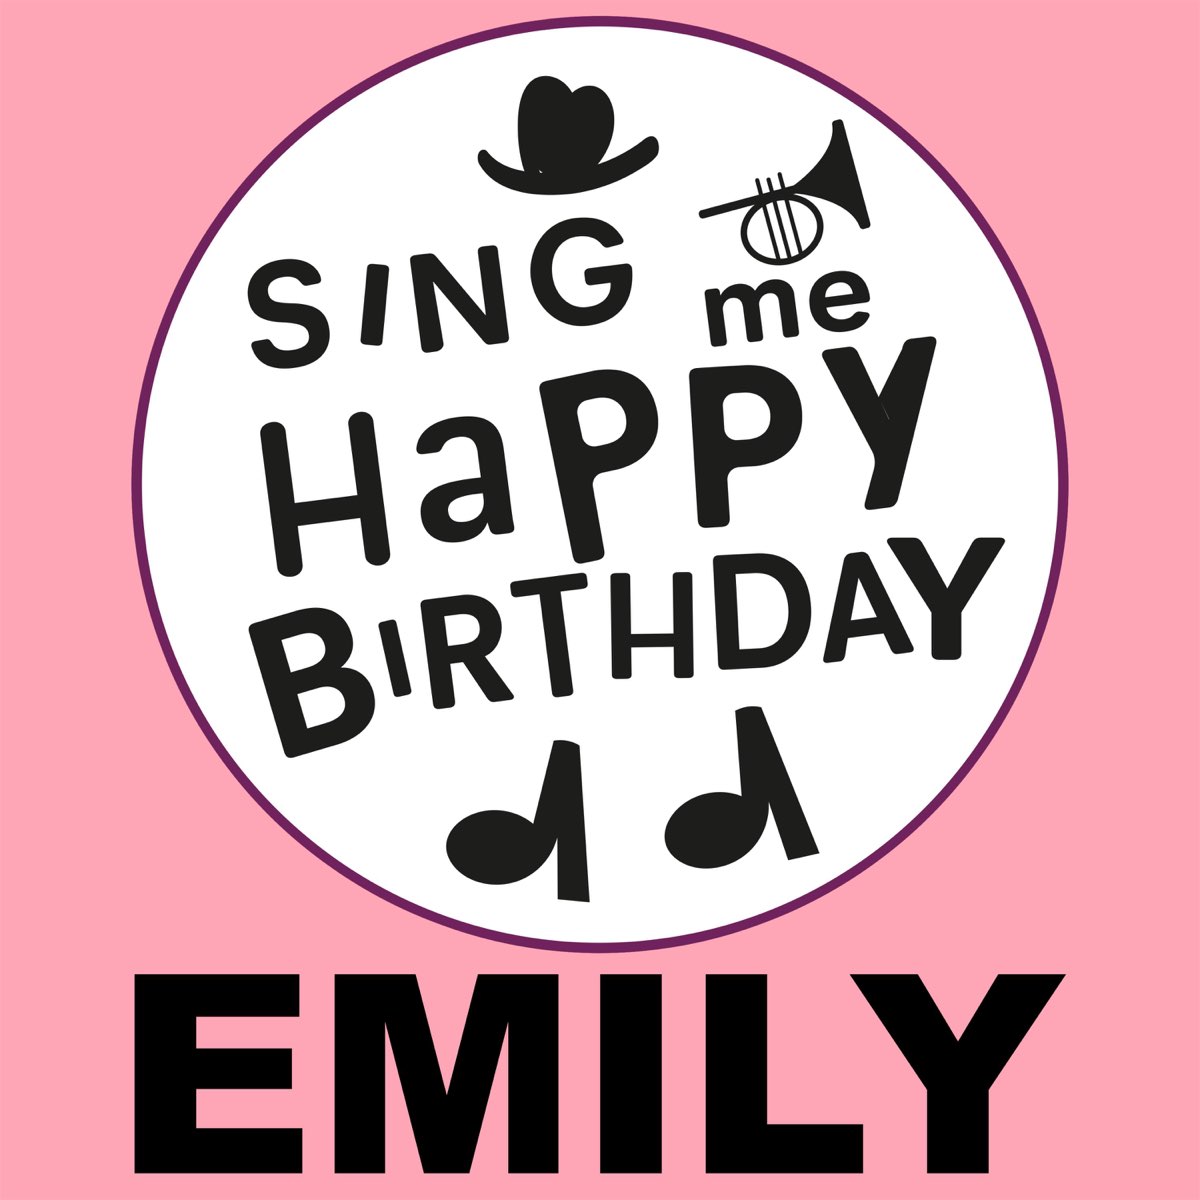 ‎Happy Birthday Emily, Vol. 1 - EP by Sing Me Happy Birthday on Apple Music